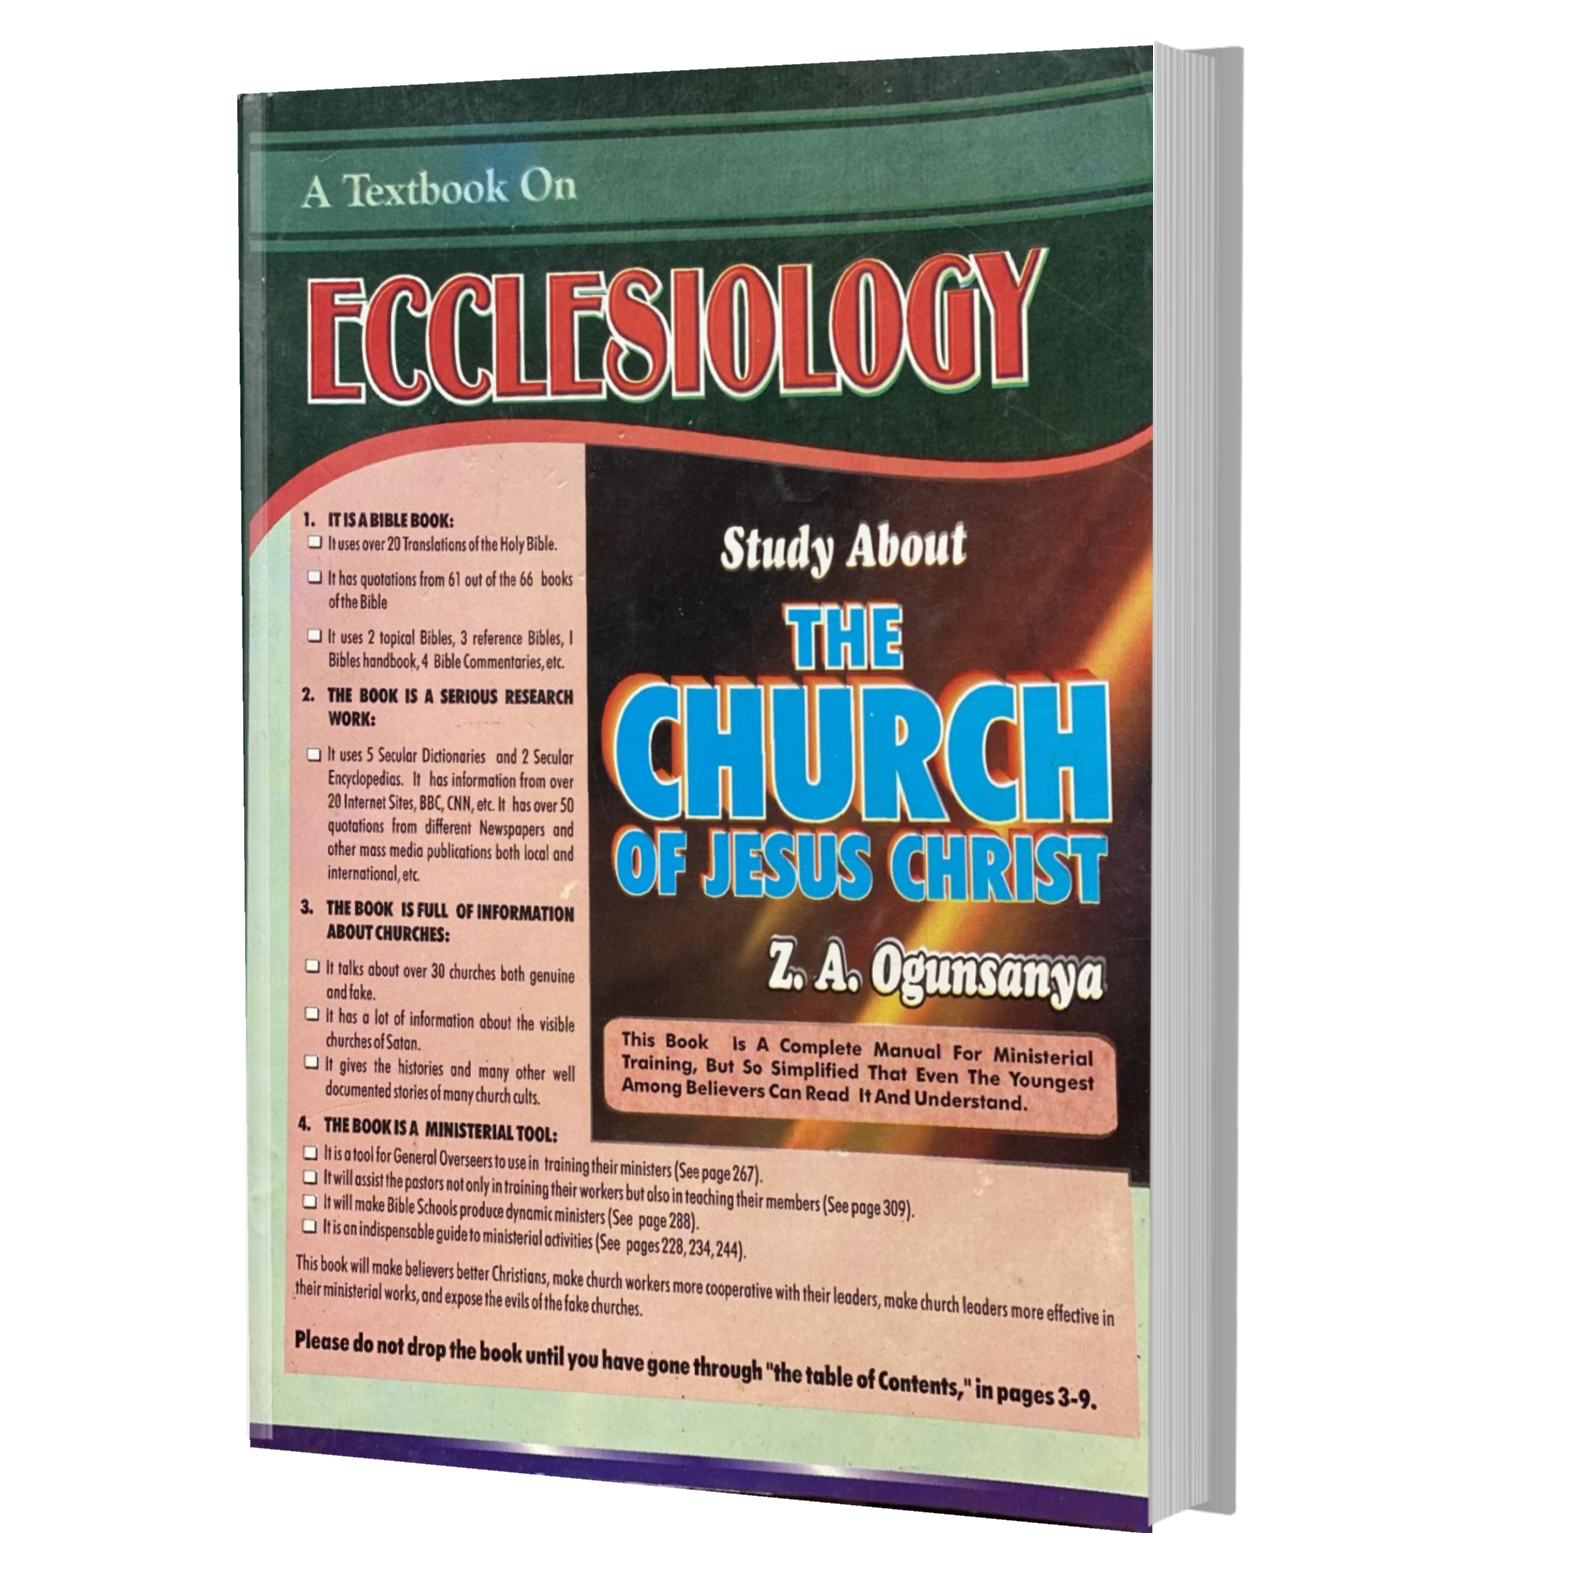 Ecclesiology 2